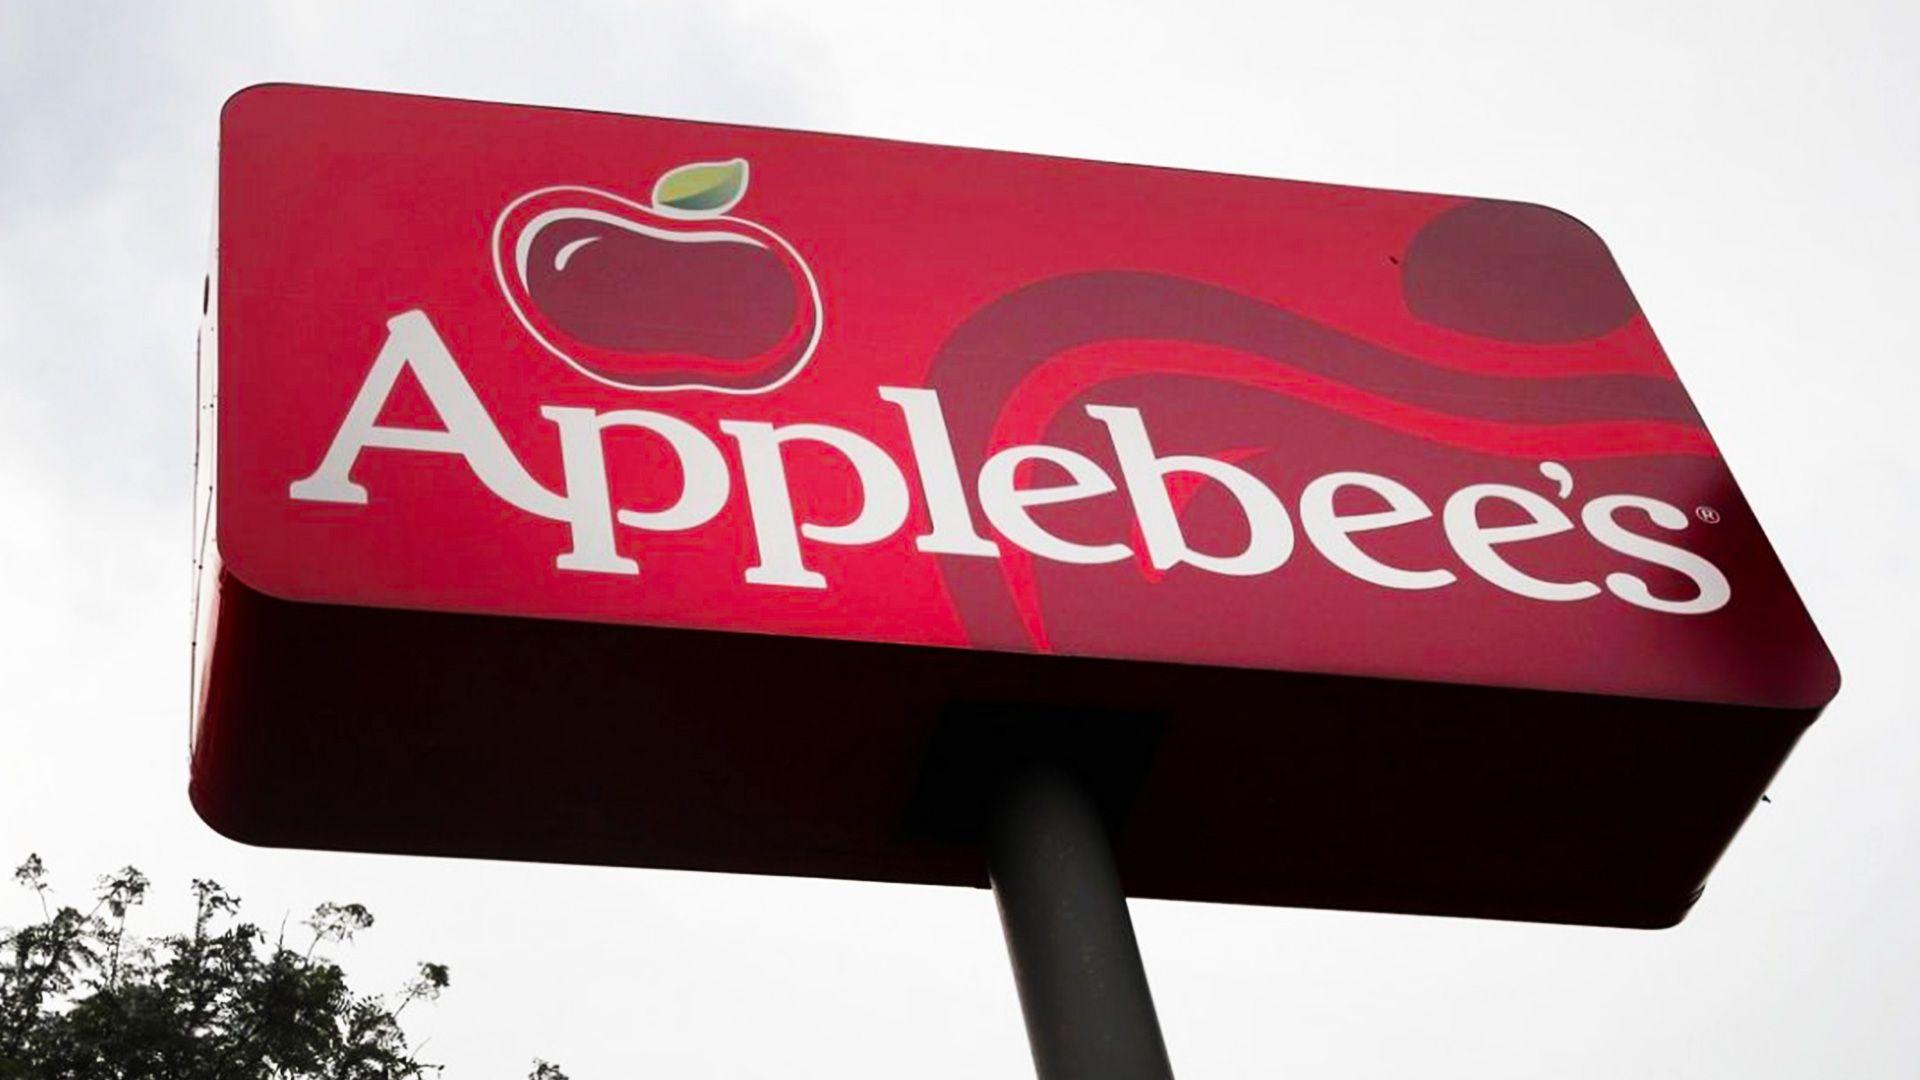 Applebee's Official Logo - Top 10 Untold Truths About Applebee's | BabbleTop